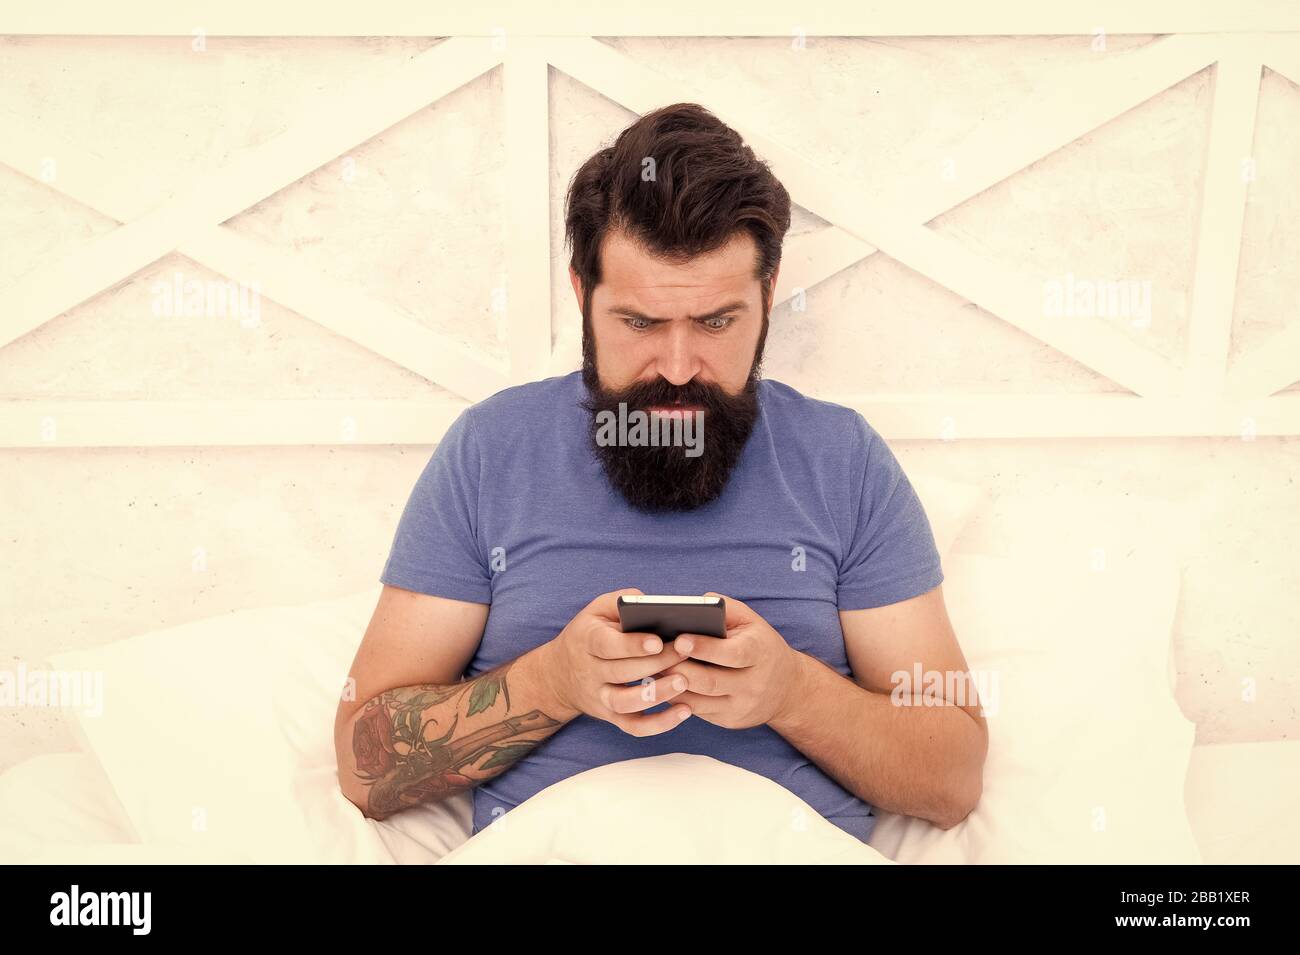 SMS communication. Bearded man use mobile phone in bed. Mobile communication. Cellular communication. Communication technology. Modern life. Stock Photo